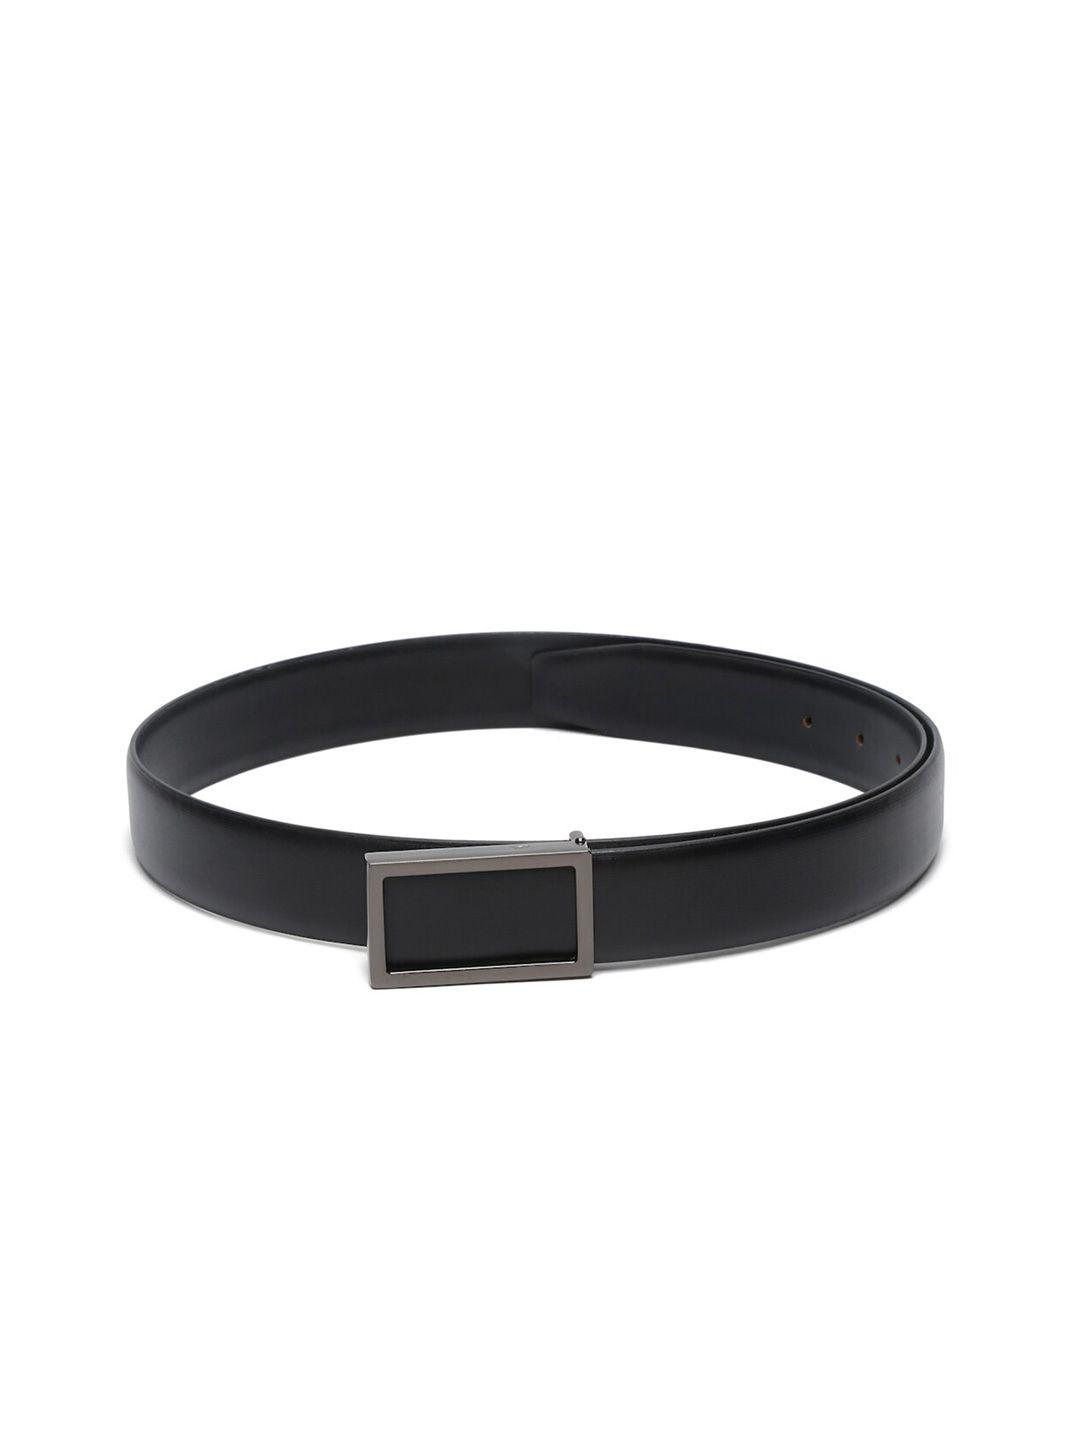 louis-stitch-men-black-leather-formal-belt